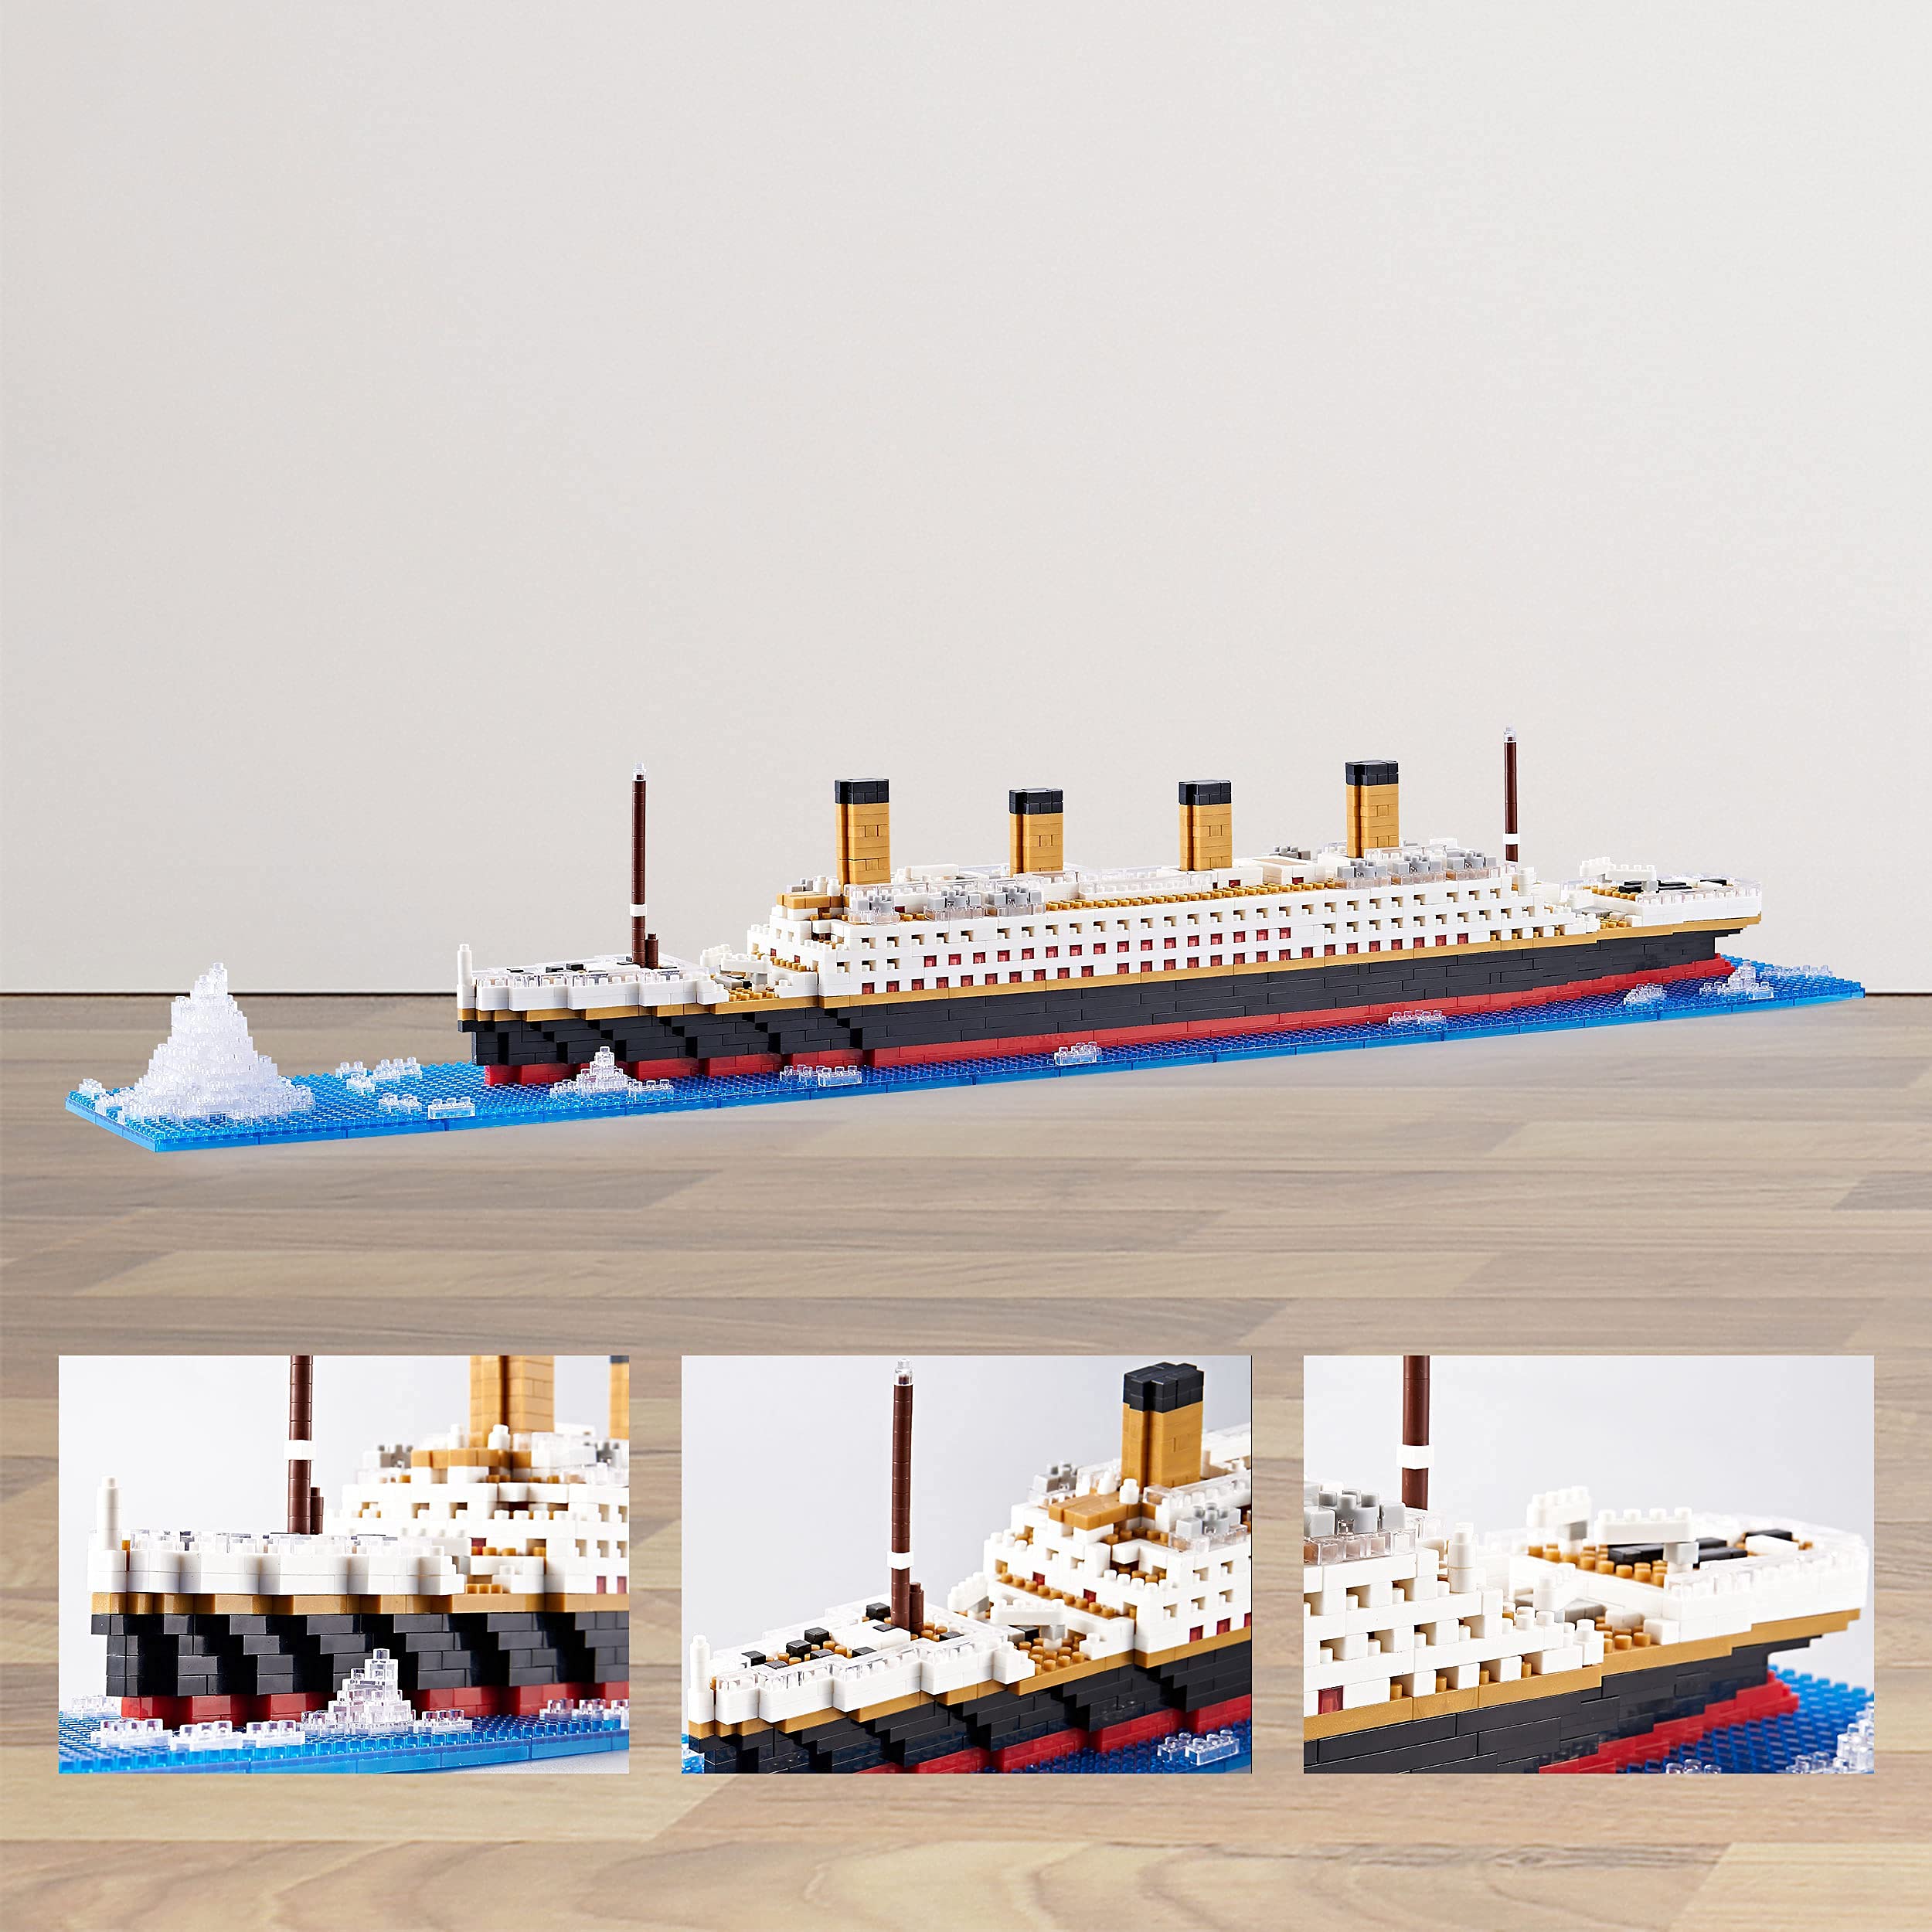 YaJie Titanic Micro Building Blocks Toys Set Mini Bricks Ship Model Kit Gifts for Adults and Kids